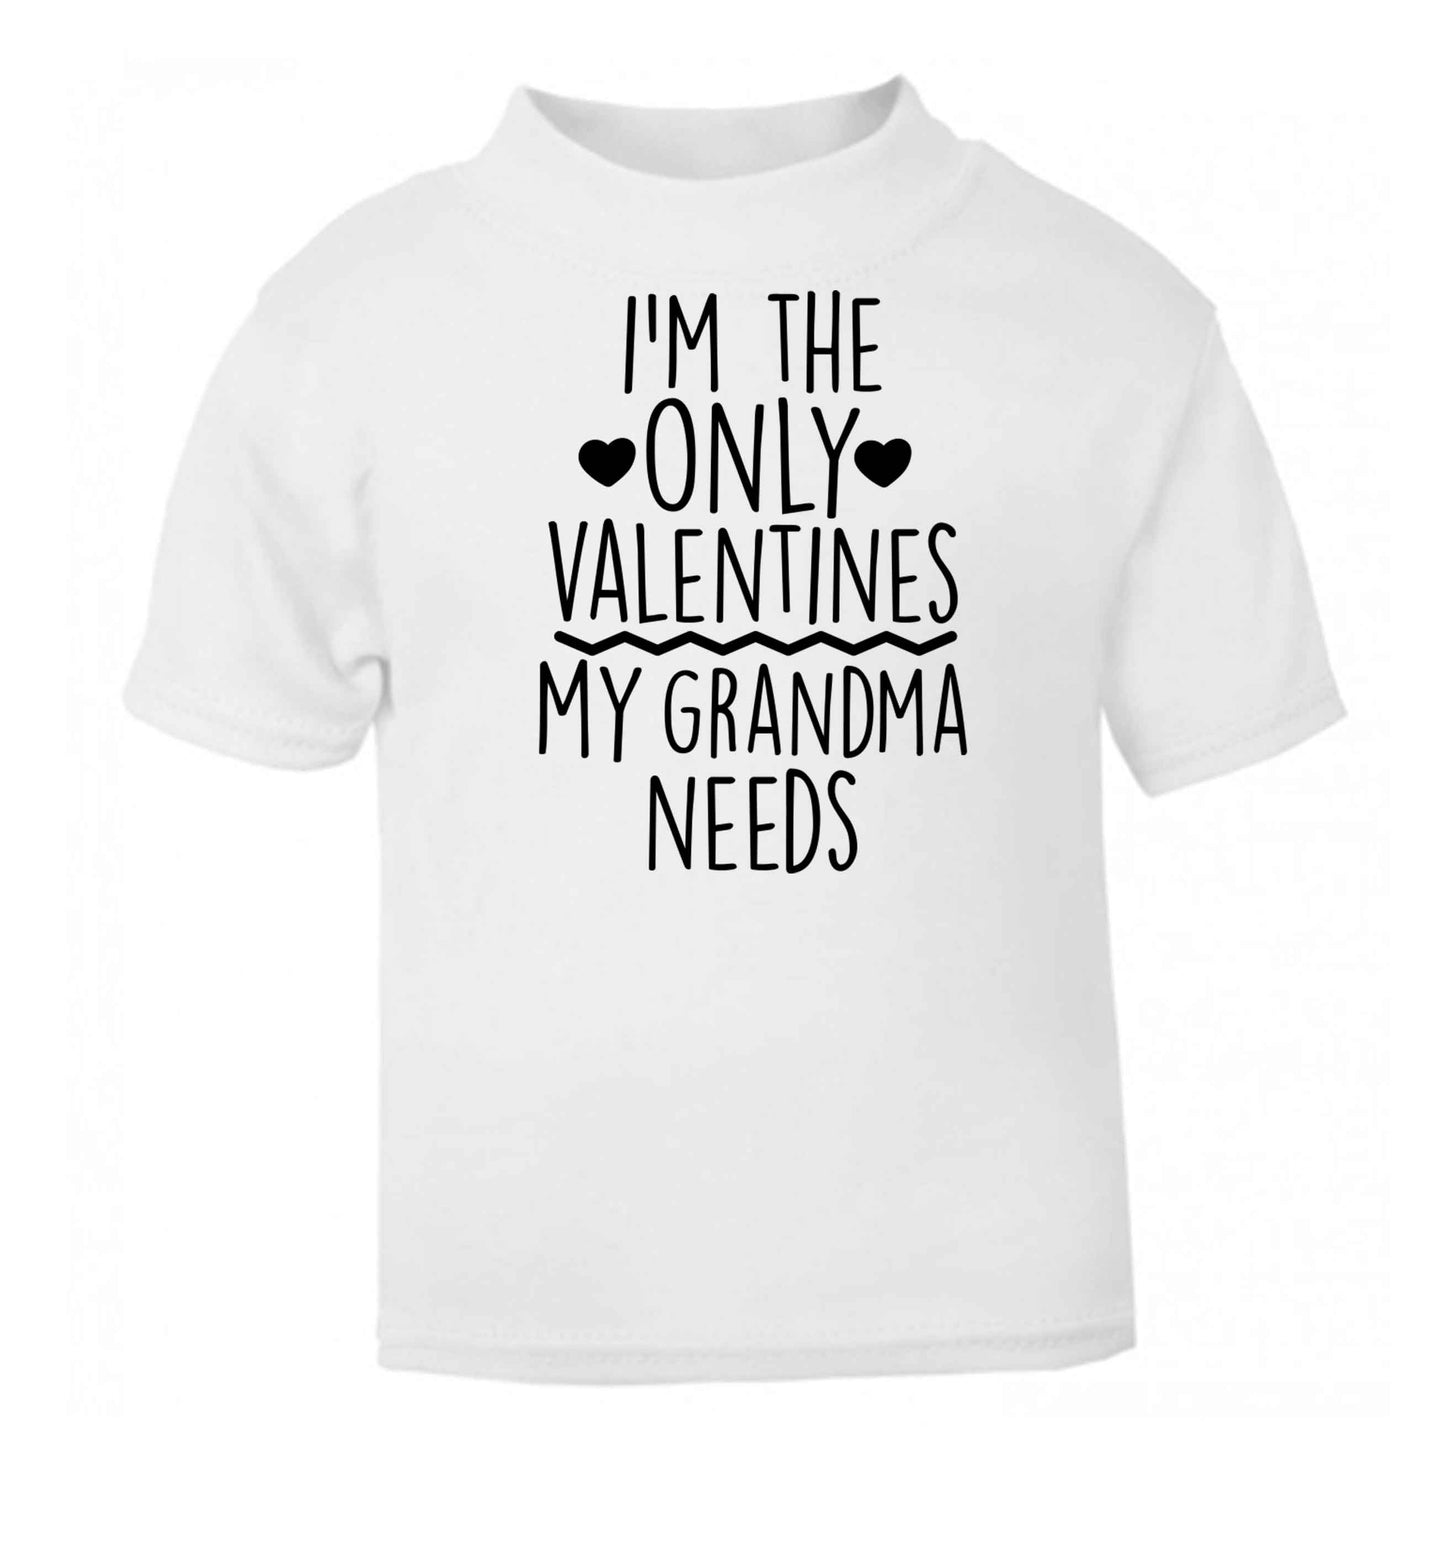 I'm the only valentines my grandma needs white baby toddler Tshirt 2 Years